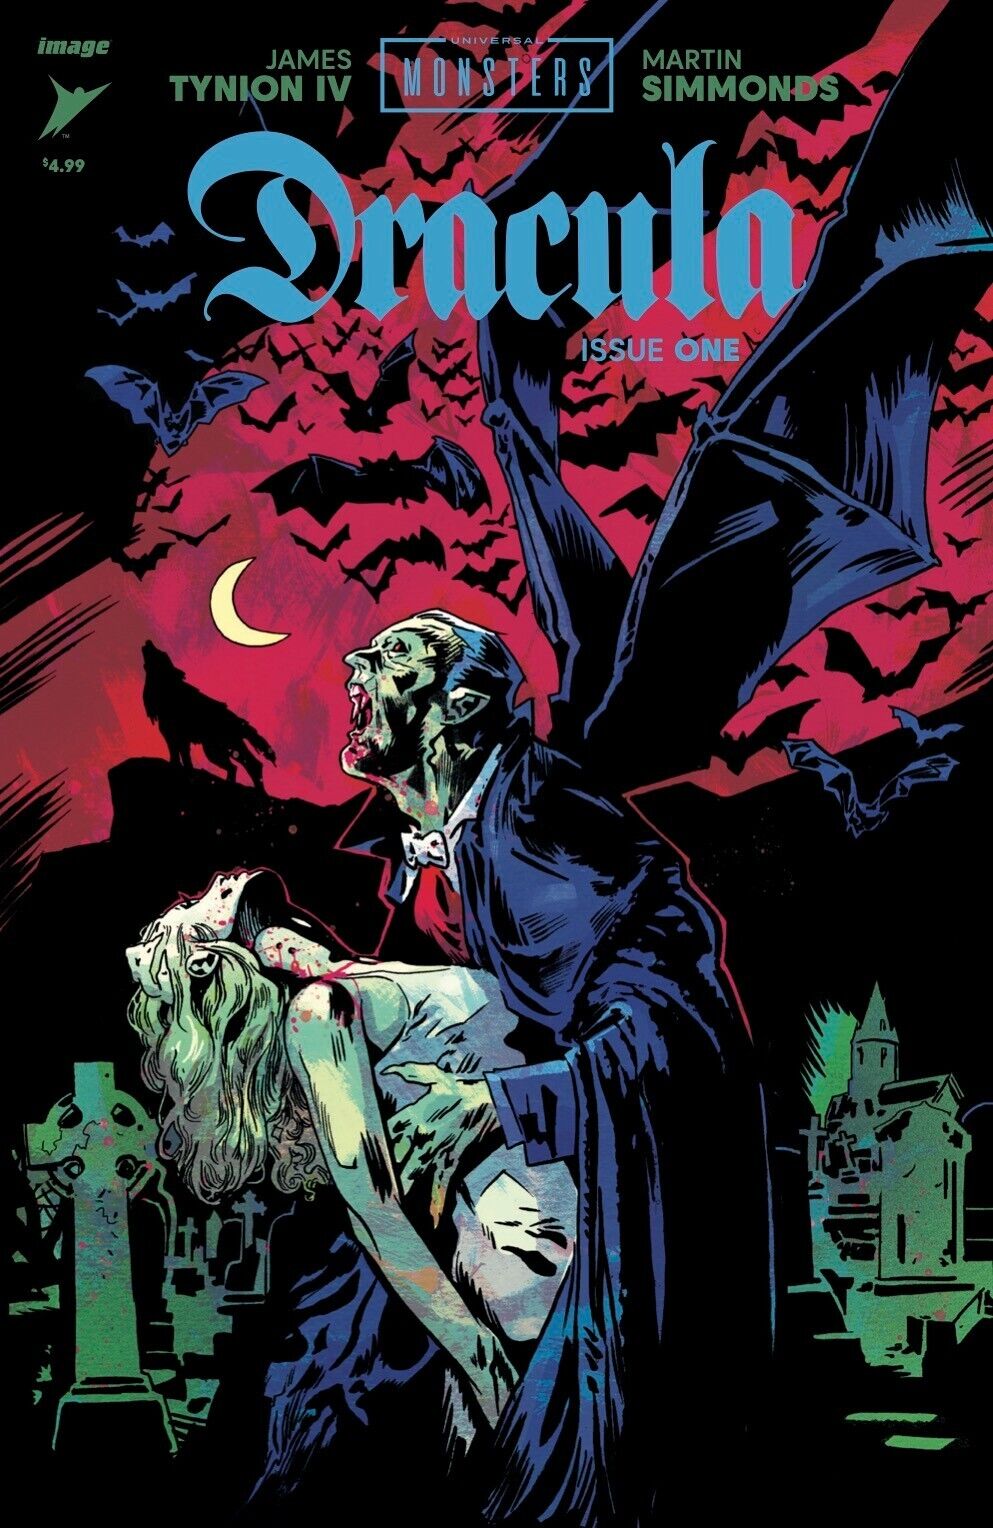 Universal Monsters Dracula # 1 Encased Comics Exclusive by Michael Walsh